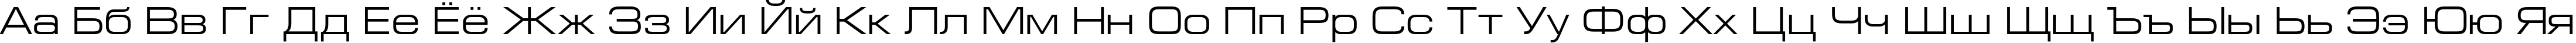 Пример написания русского алфавита шрифтом EuropeExt